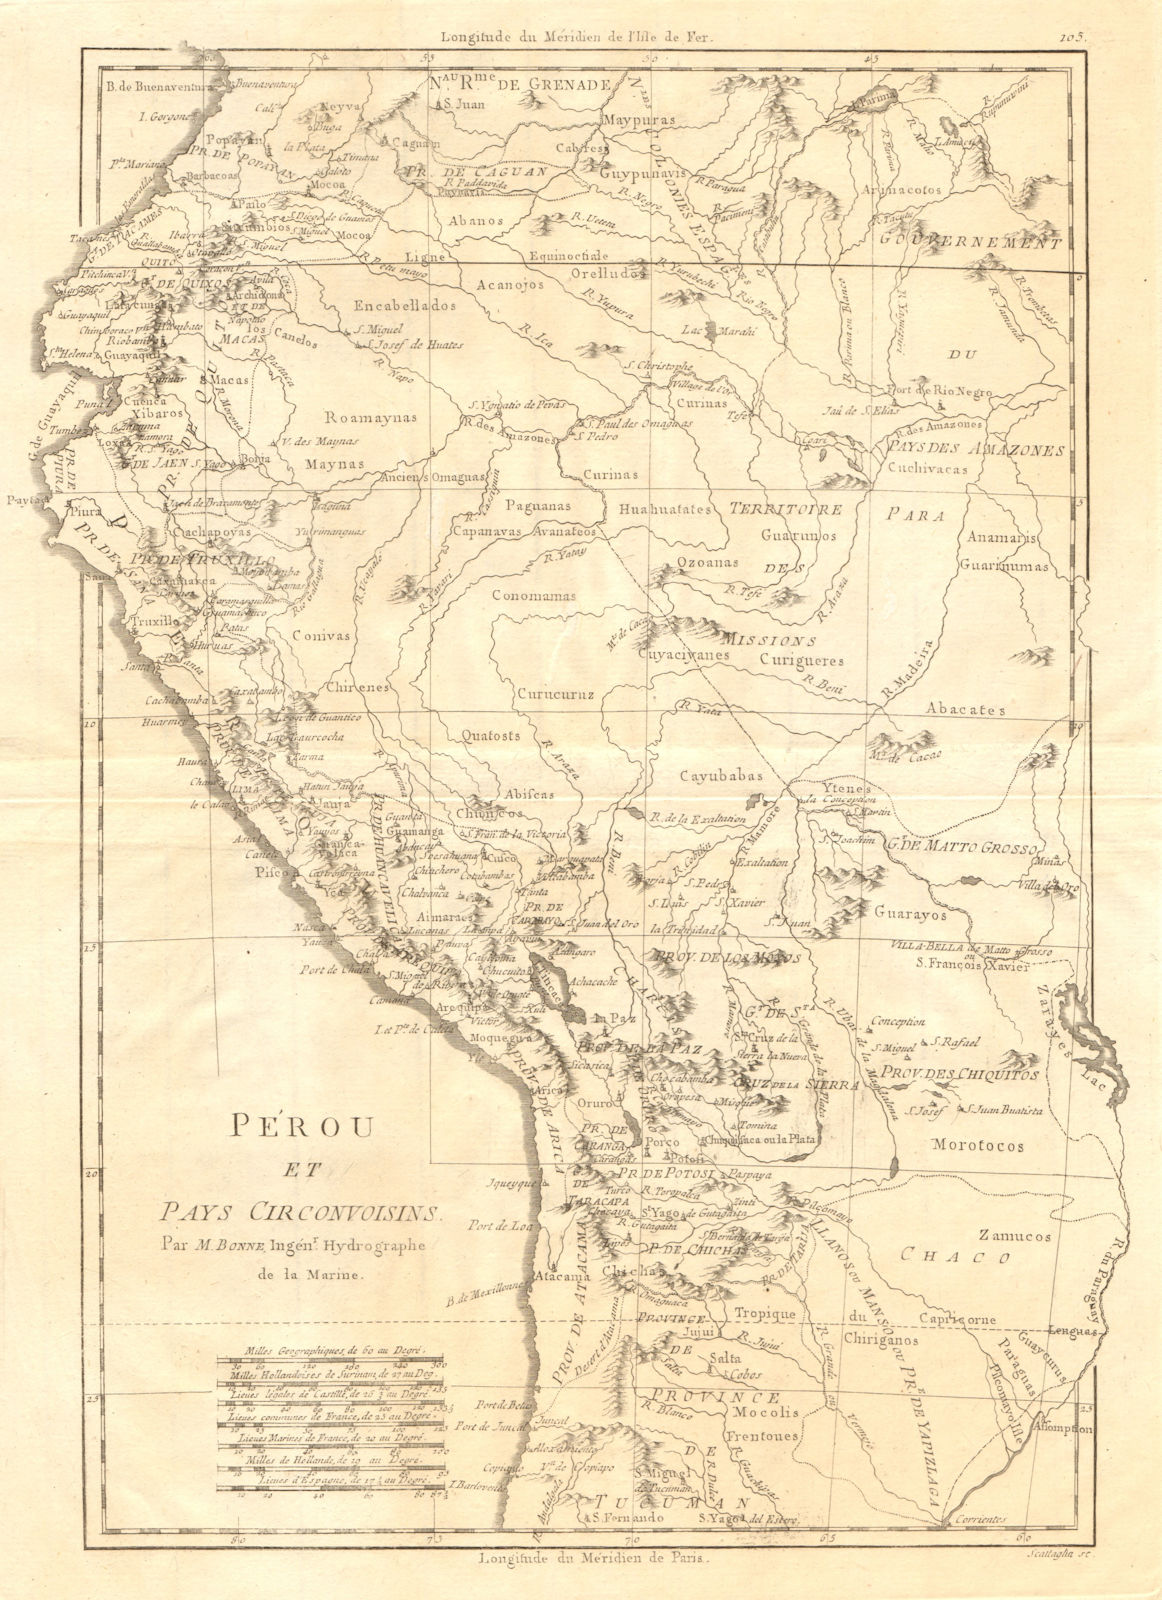 Perou et Pays circonvoisins. Peru, Ecuador, Bolivia & Amazonia. BONNE 1790 map